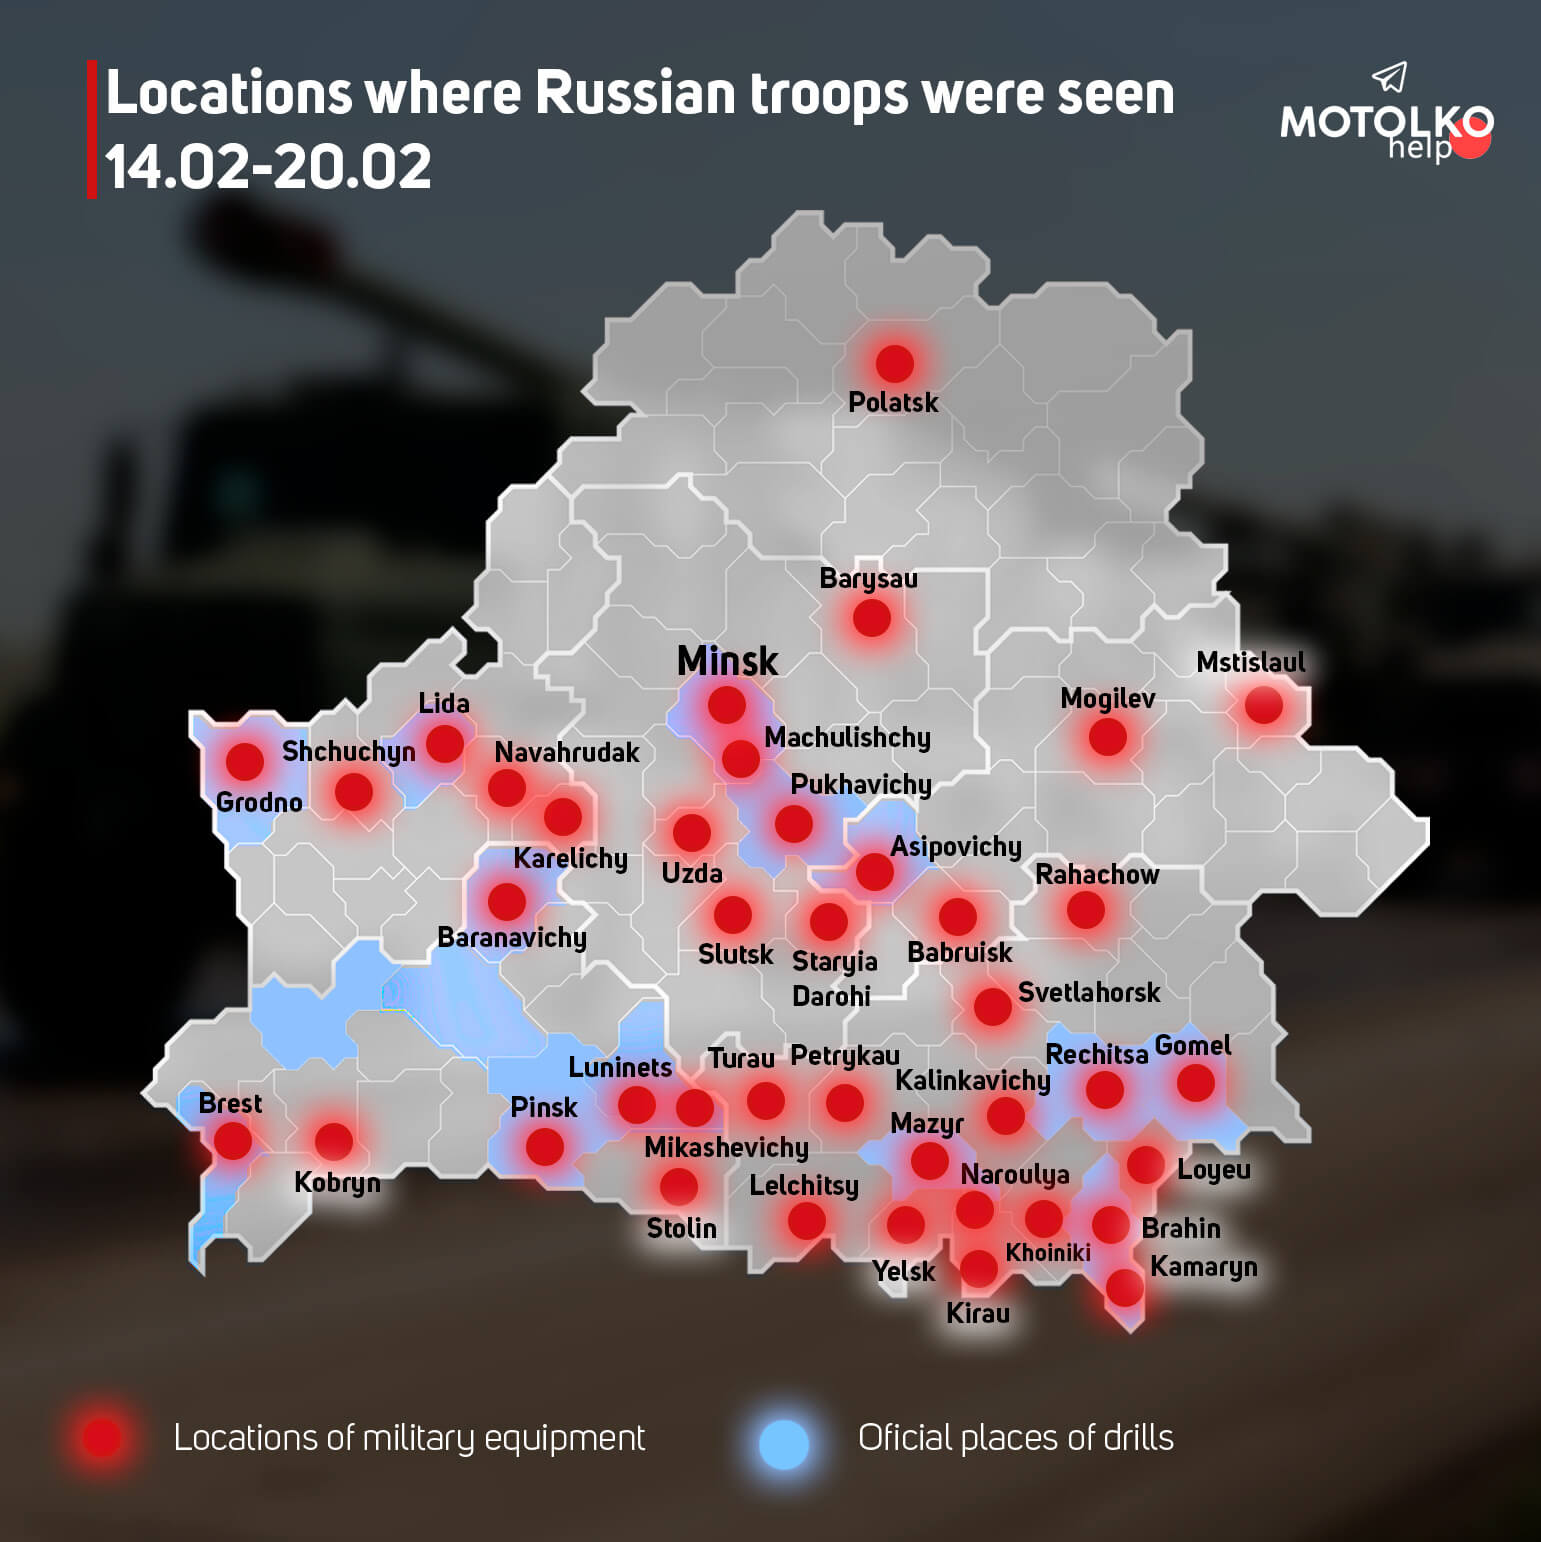 “Solntsepyok”, “Iskander”, “Grad”: Russian troops spotted 1 km from the Ukrainian border